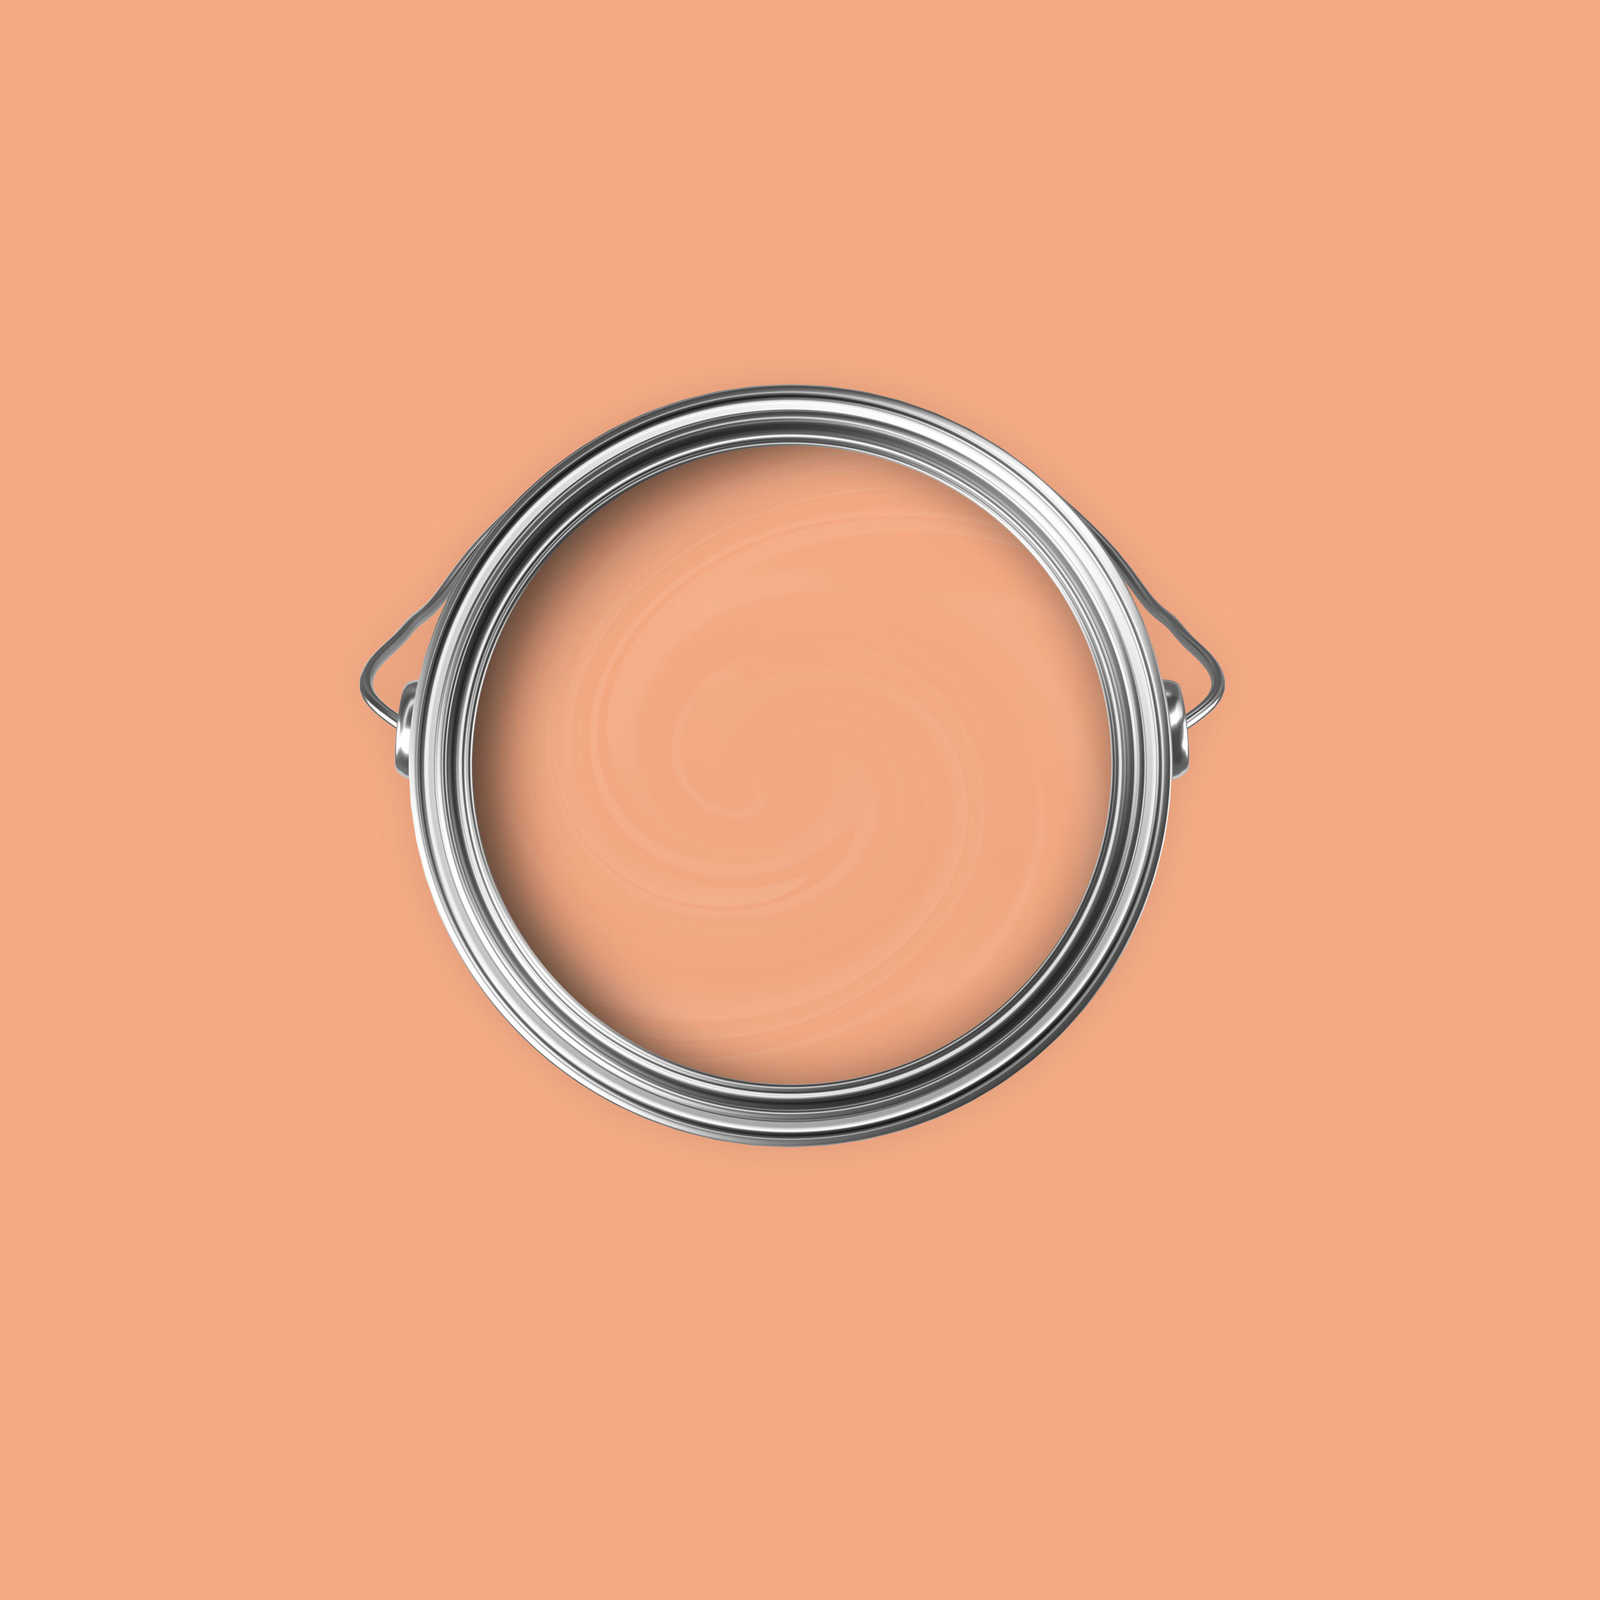             Premium Wandfarbe freundliches Lachs »Active Apricot« NW913 – 2,5 Liter
        